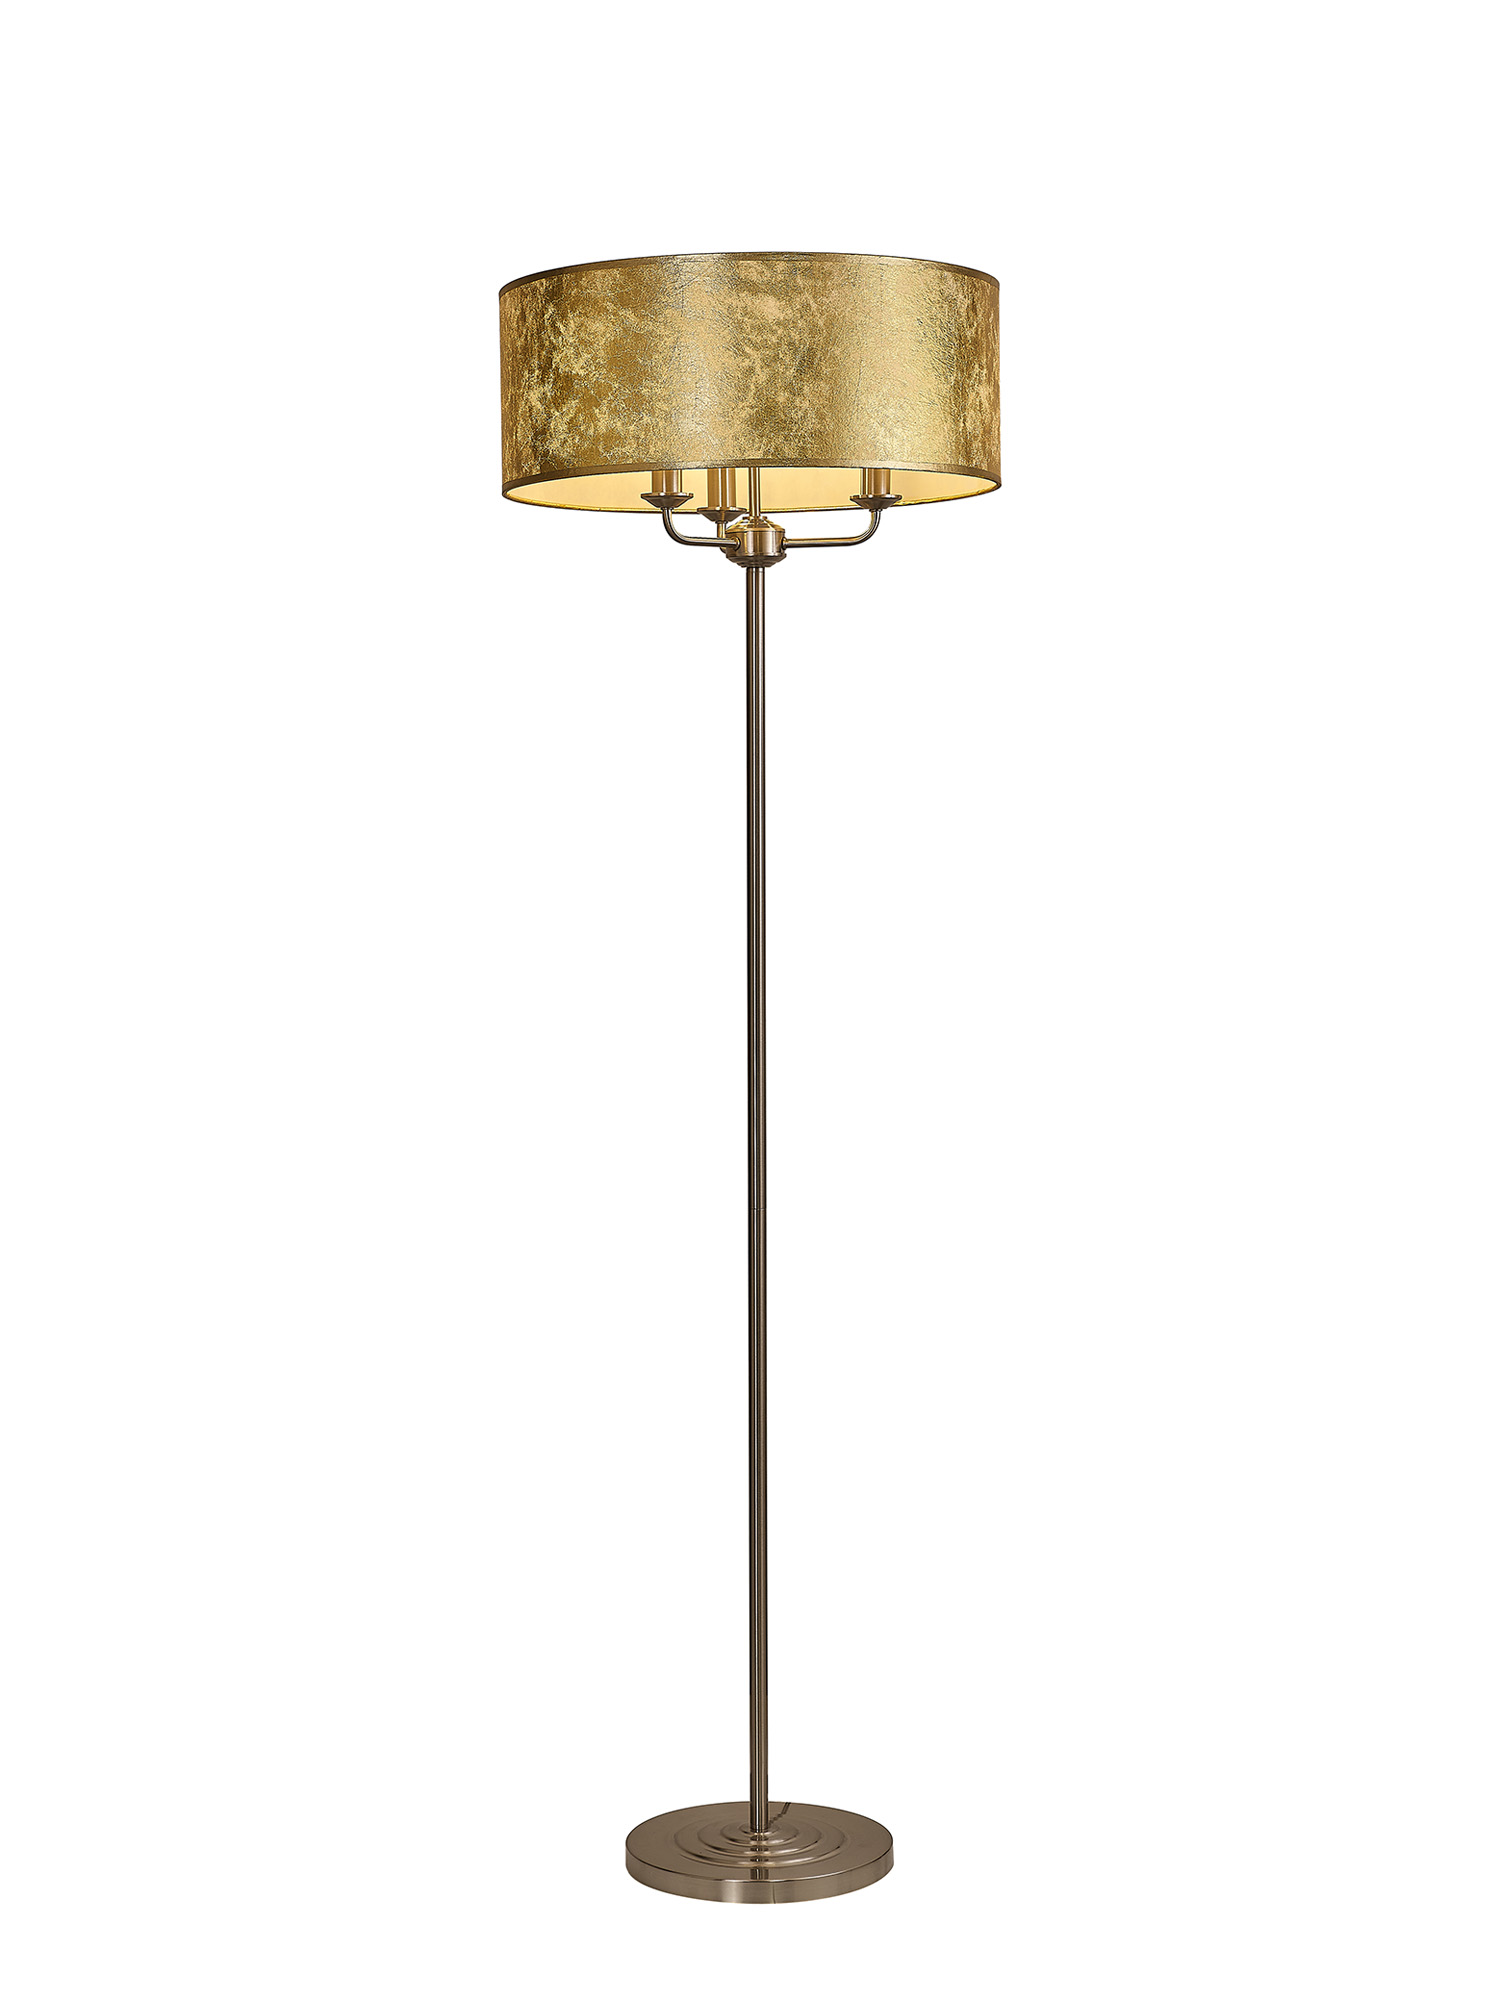 DK0939  Banyan 45cm 3 Light Floor Lamp Satin Nickel, Gold Leaf